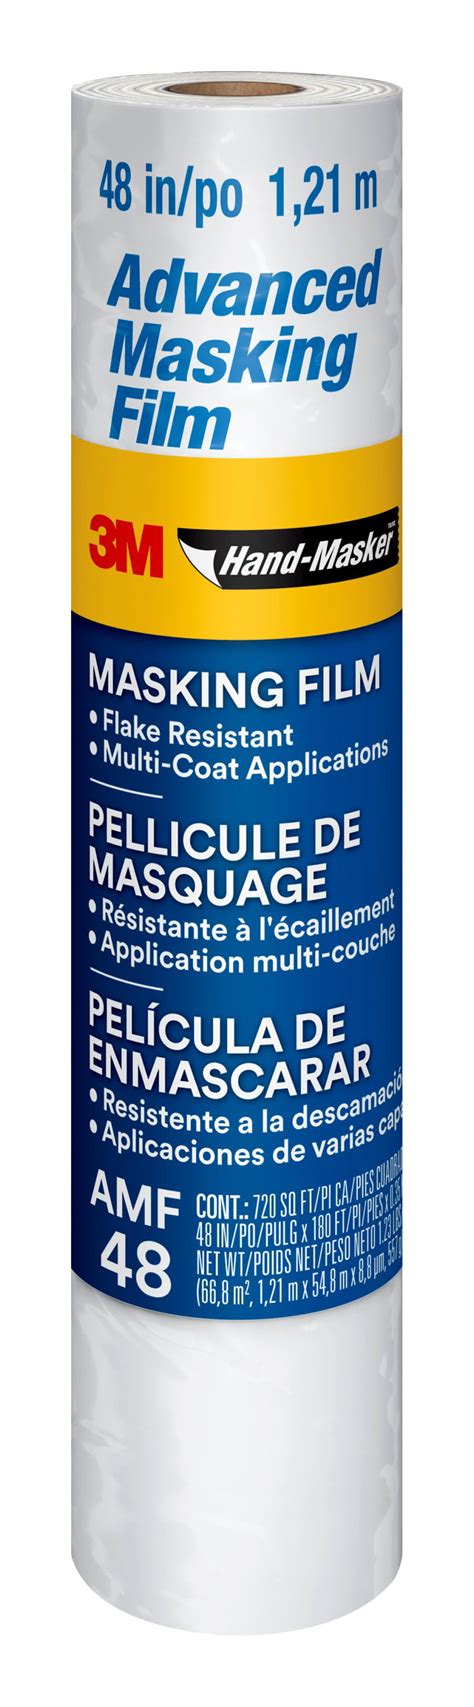 hand masker advanced masking film amf     ft   mil walmartcom walmartcom